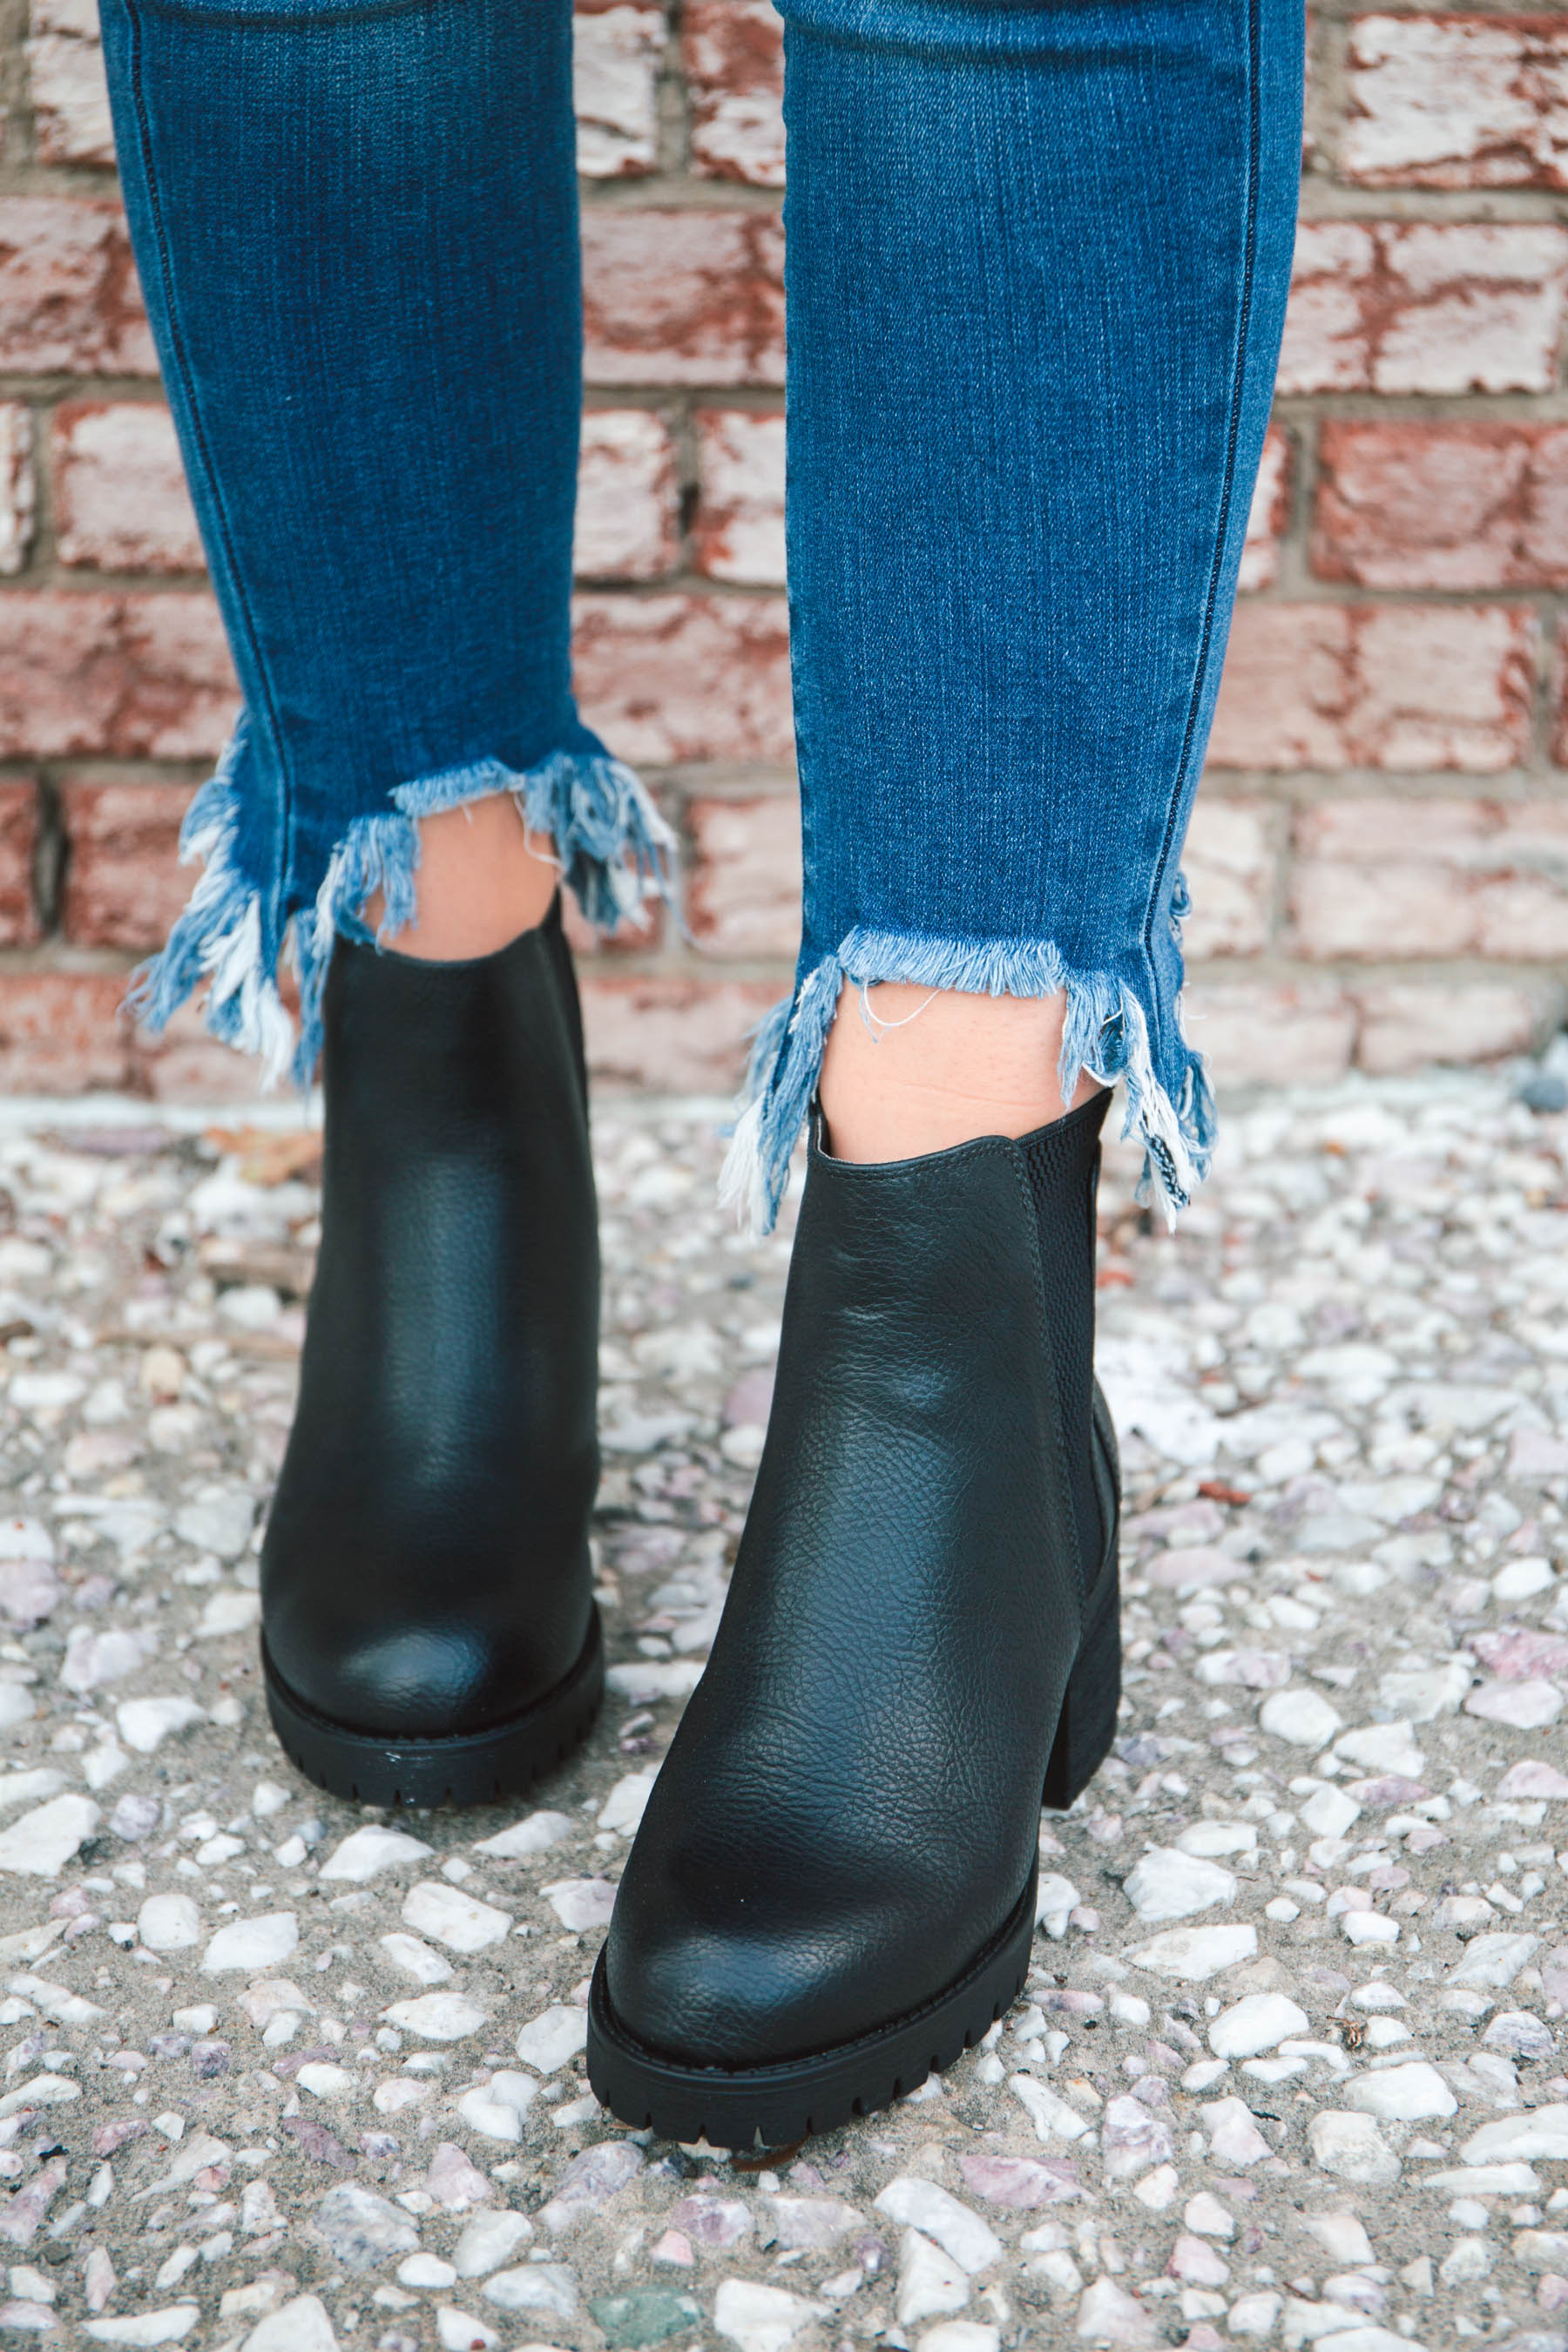 black friday deals chelsea boots